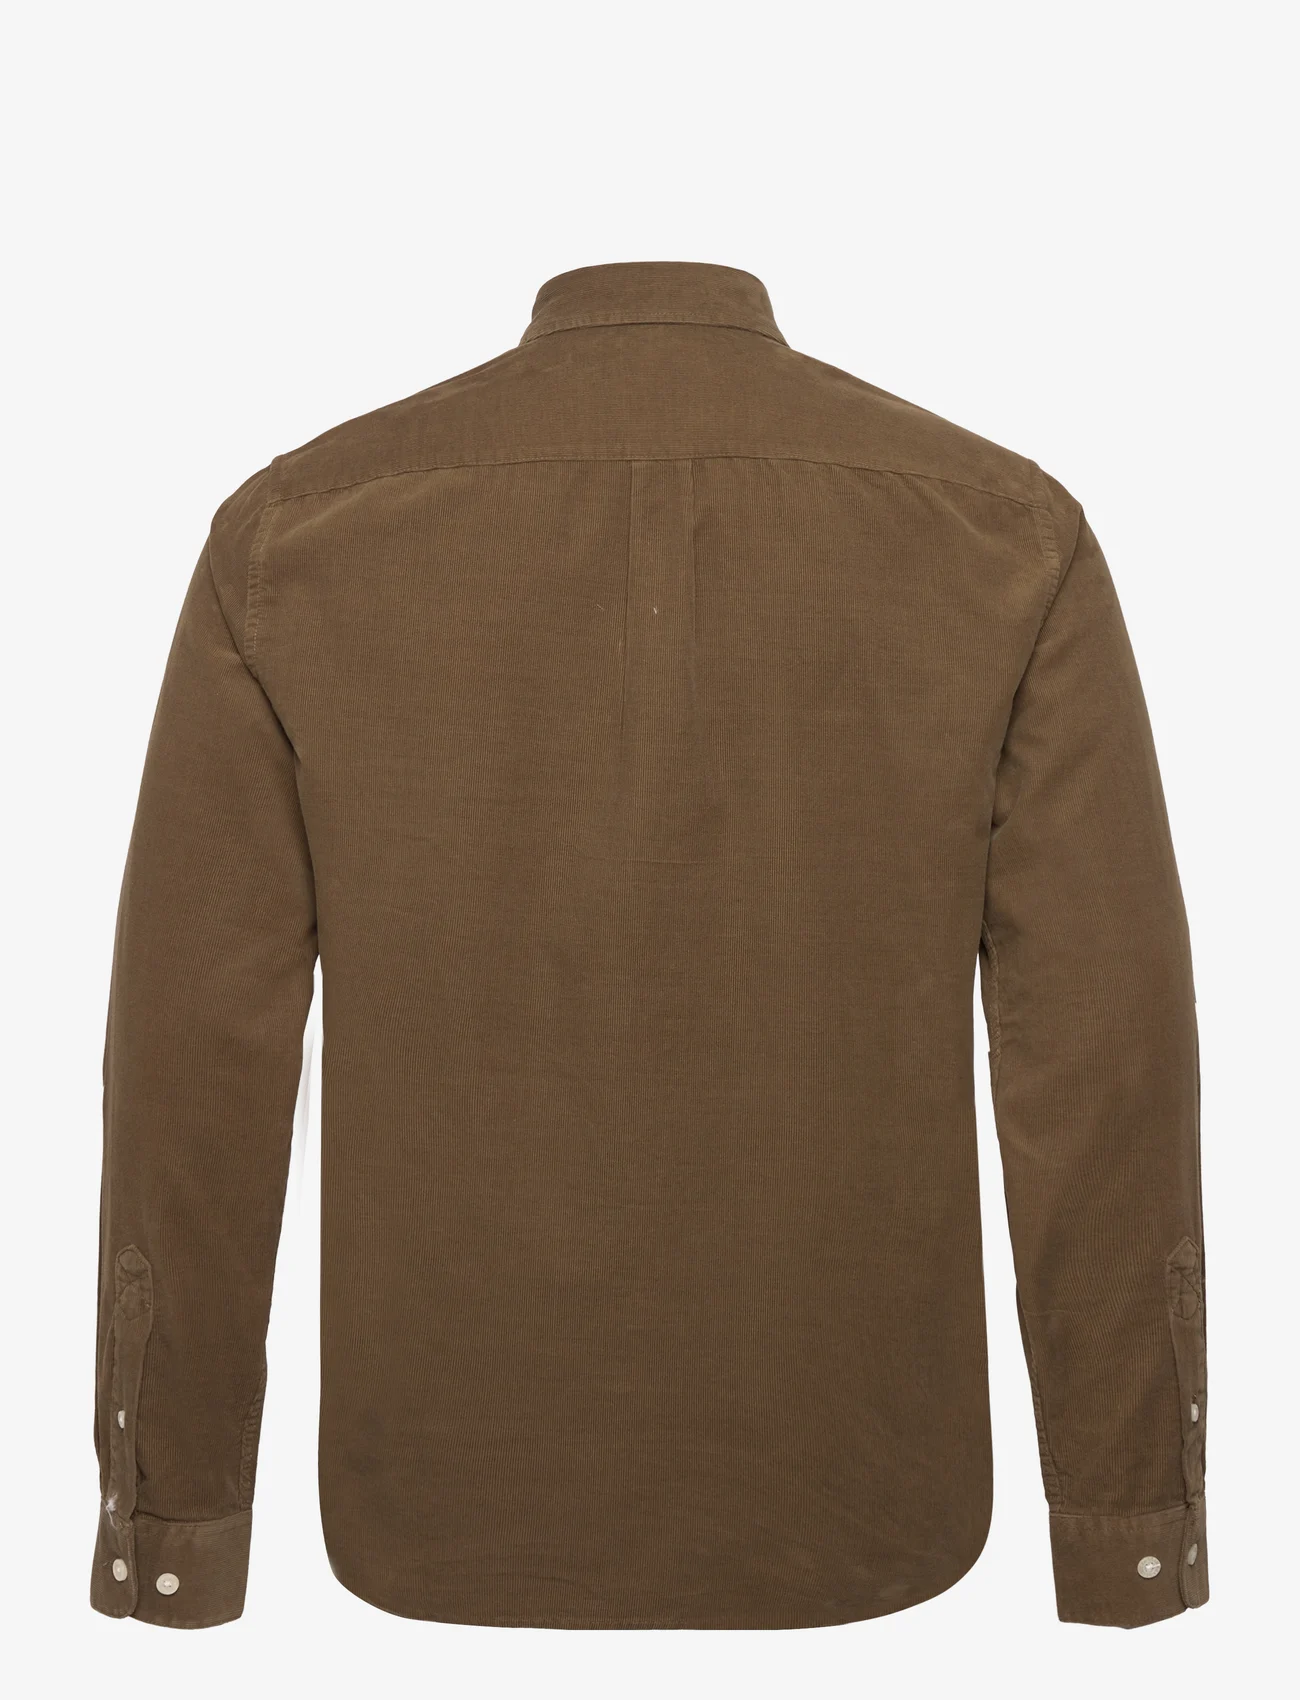 Samsøe Samsøe - Liam BX shirt 10504 - vakosamettipaidat - stone gray - 1